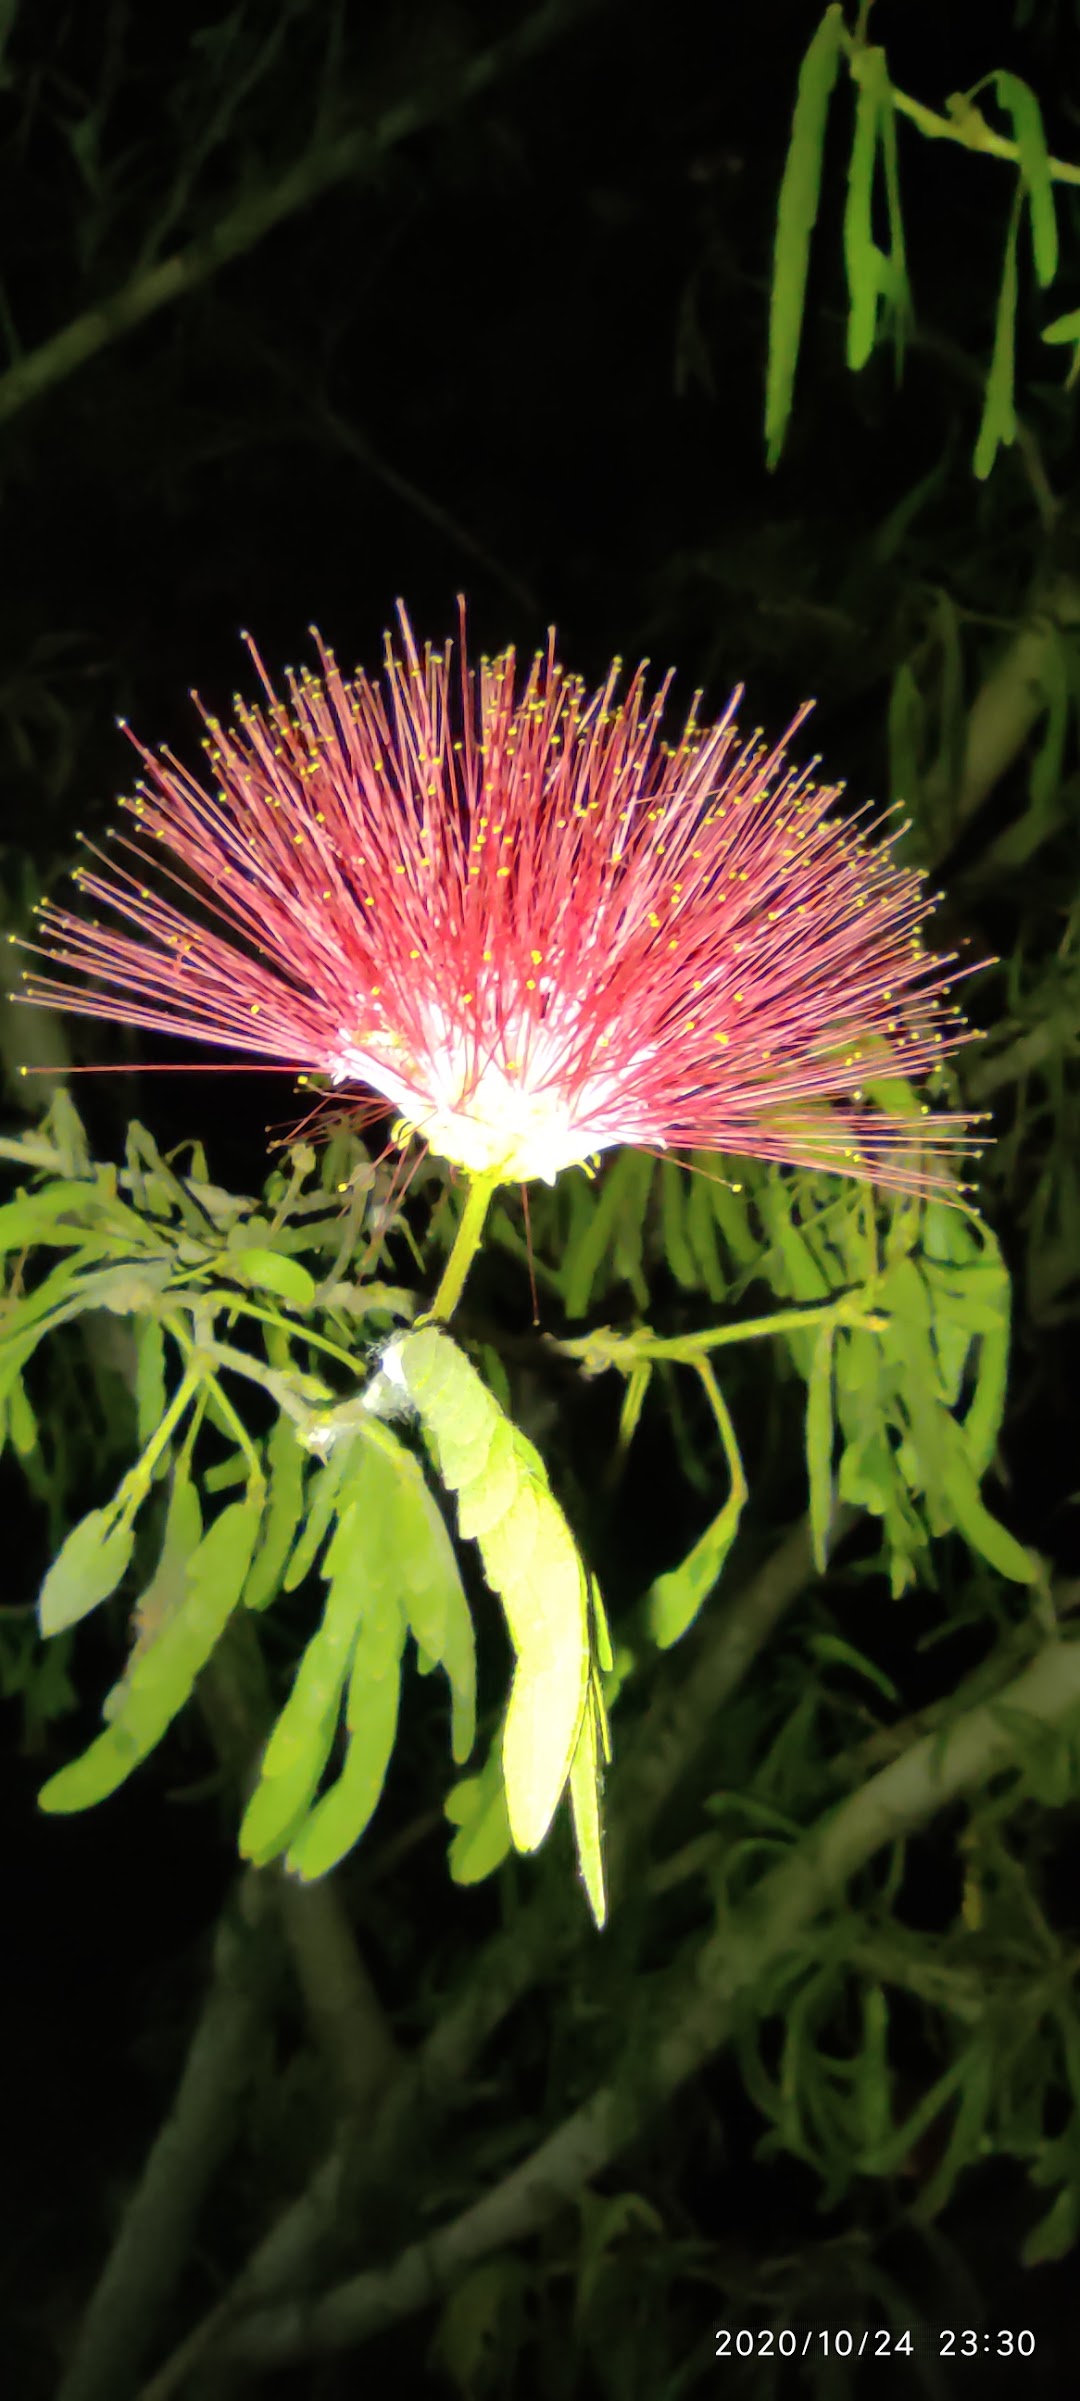 Calliandra plant in Pakistan